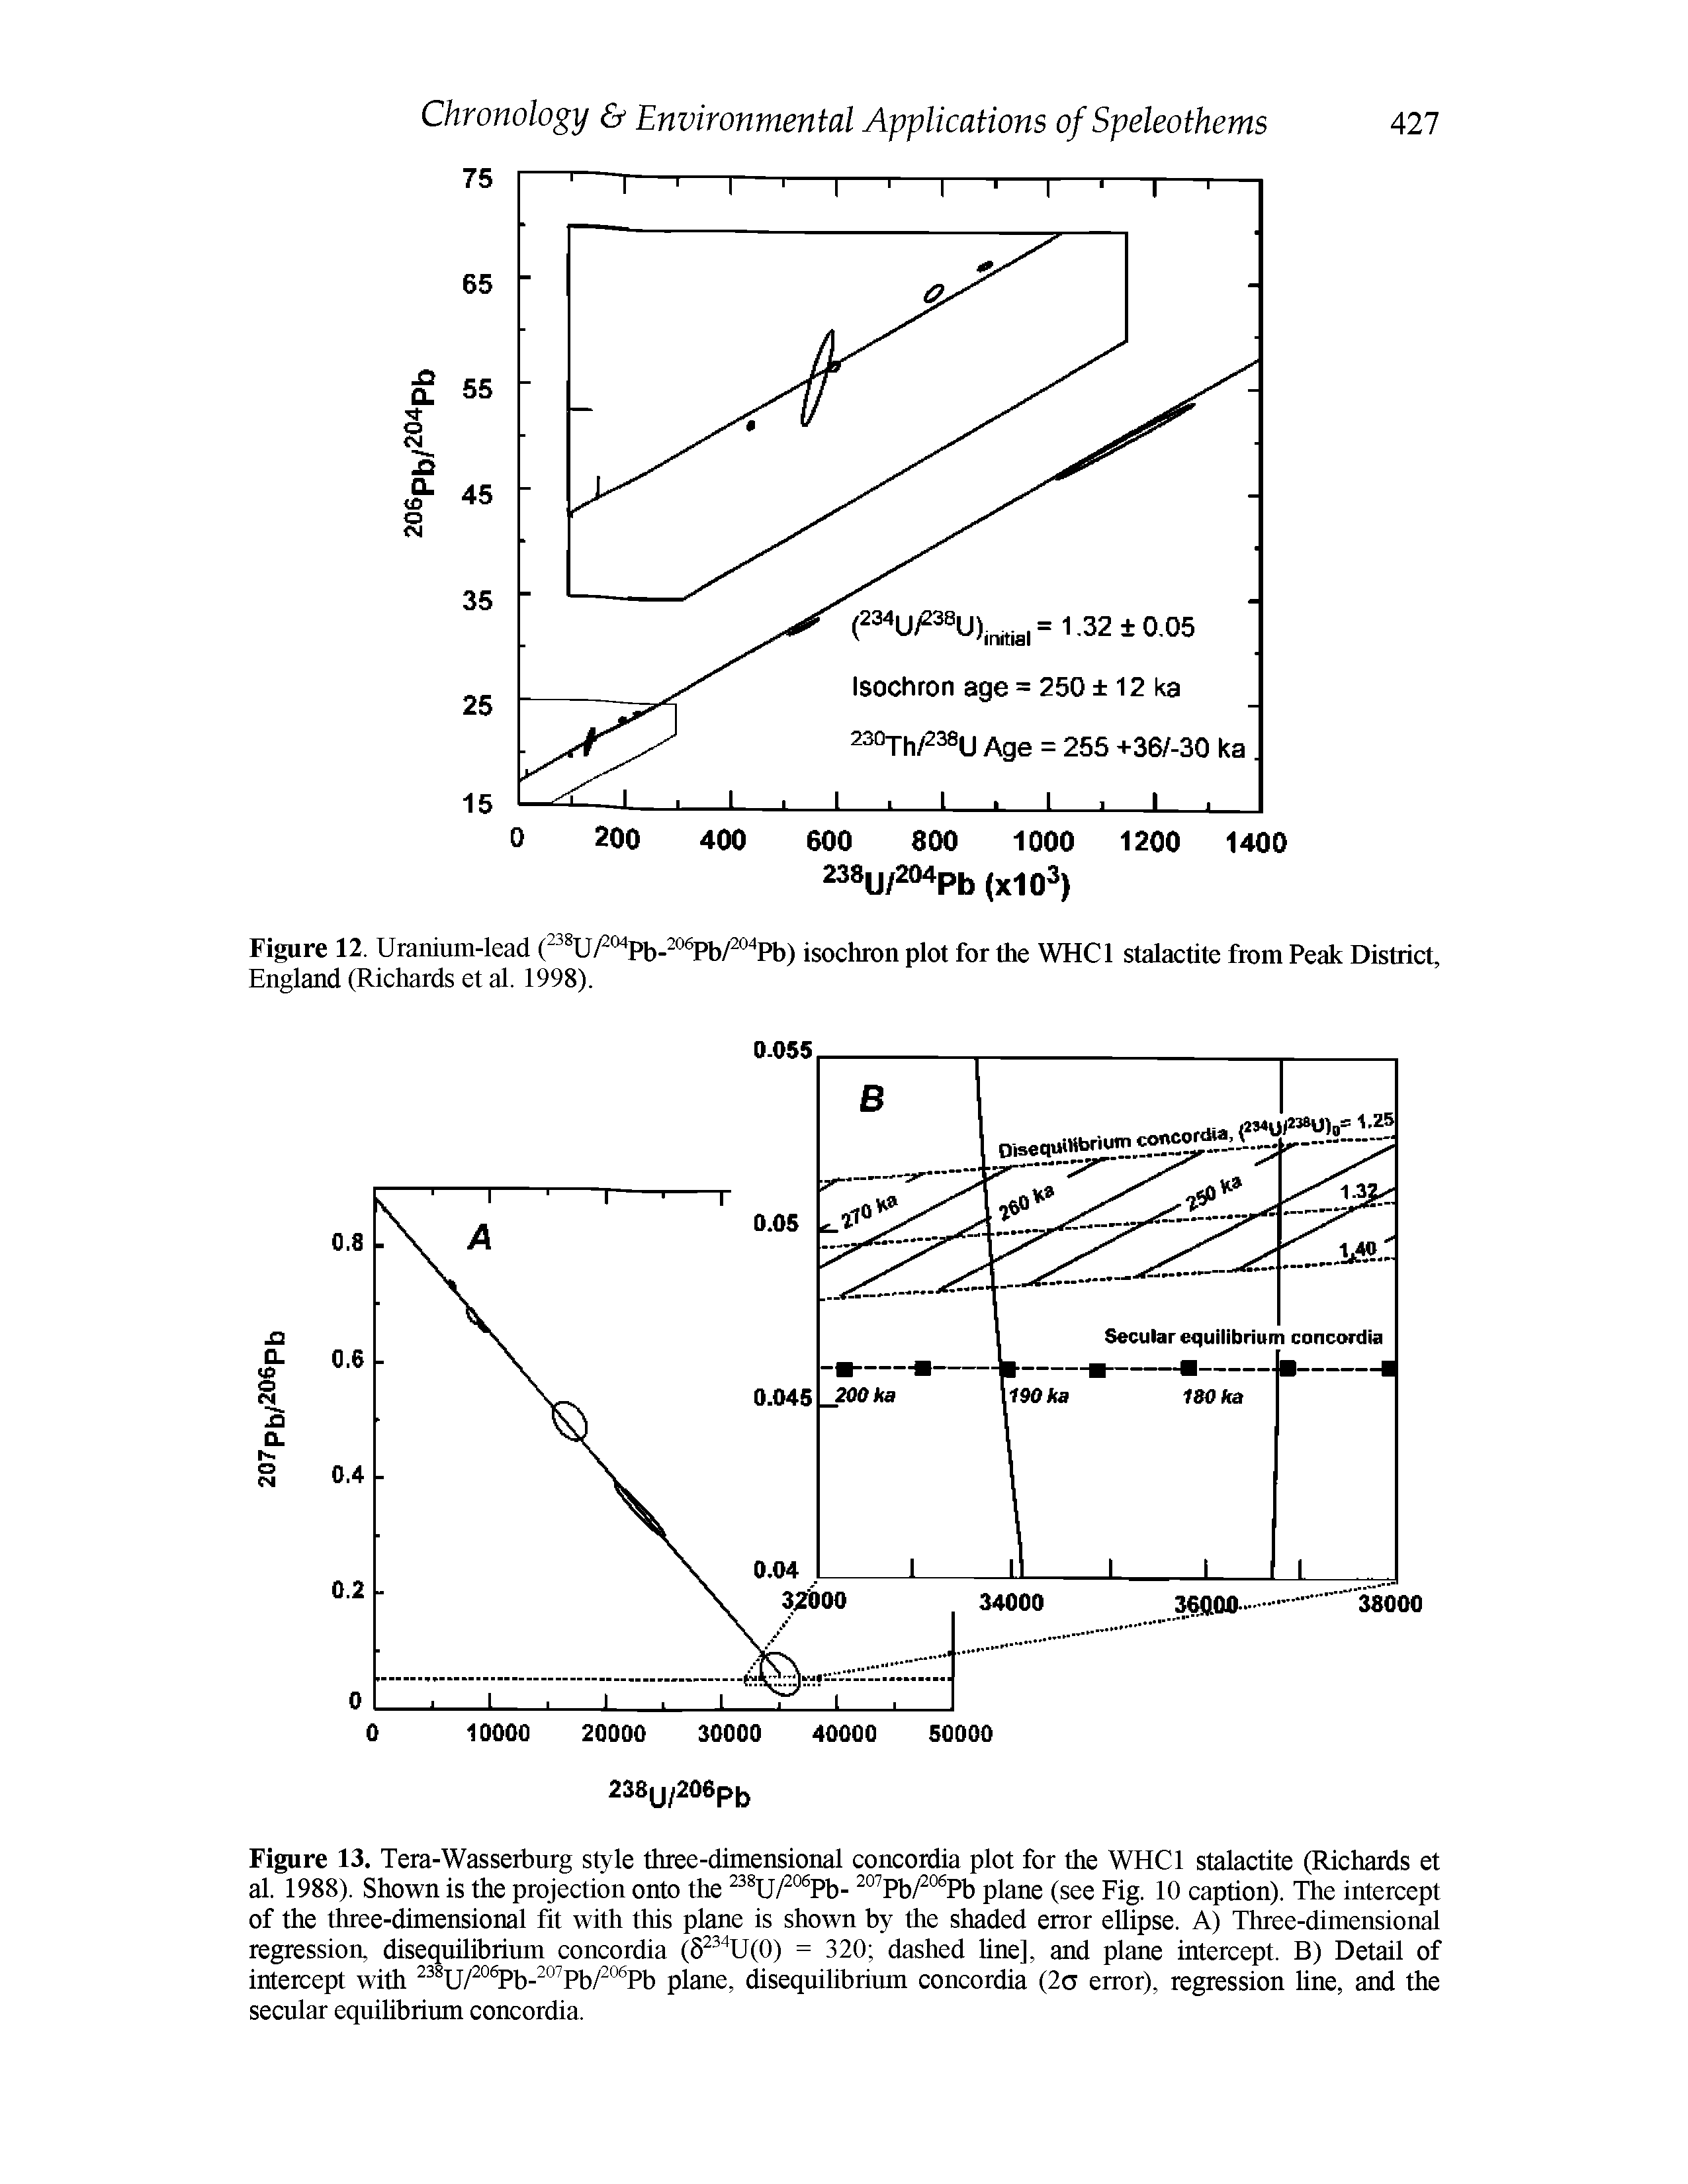 Figure 12. Uranium-lead ( U/ Pb- ° Pb/ °" Pb) isochron plot for the WHCl stalactite from Peak District, England (Richards et al. 1998).